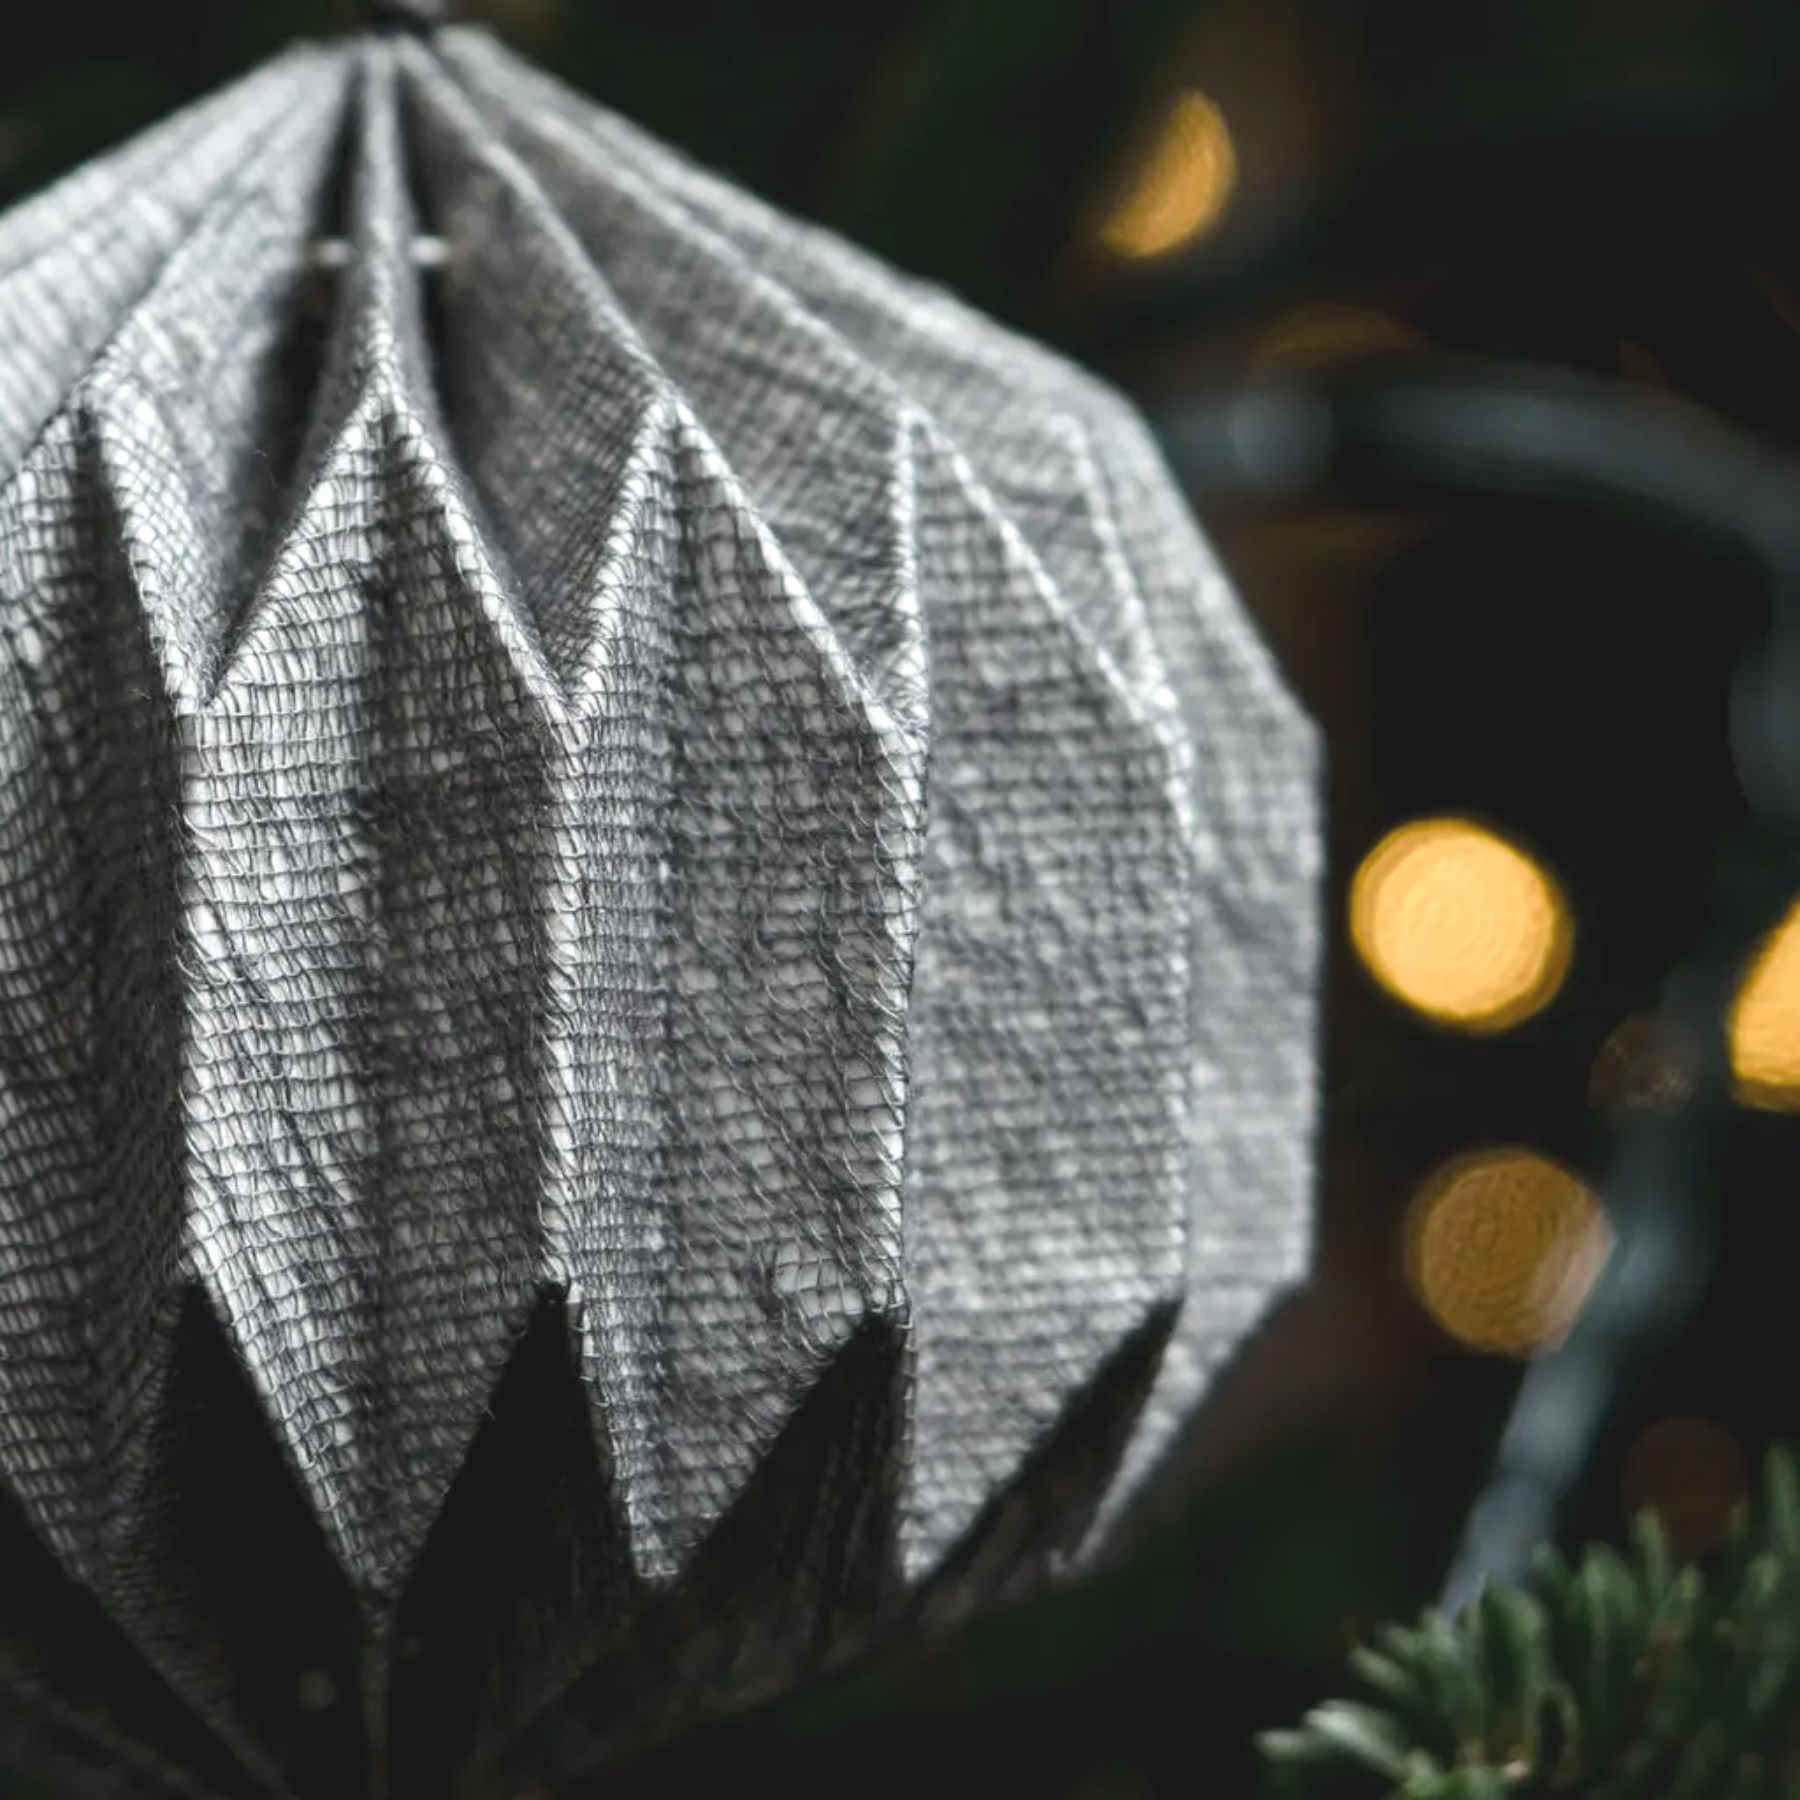 Grey Geometric Paper Ornament